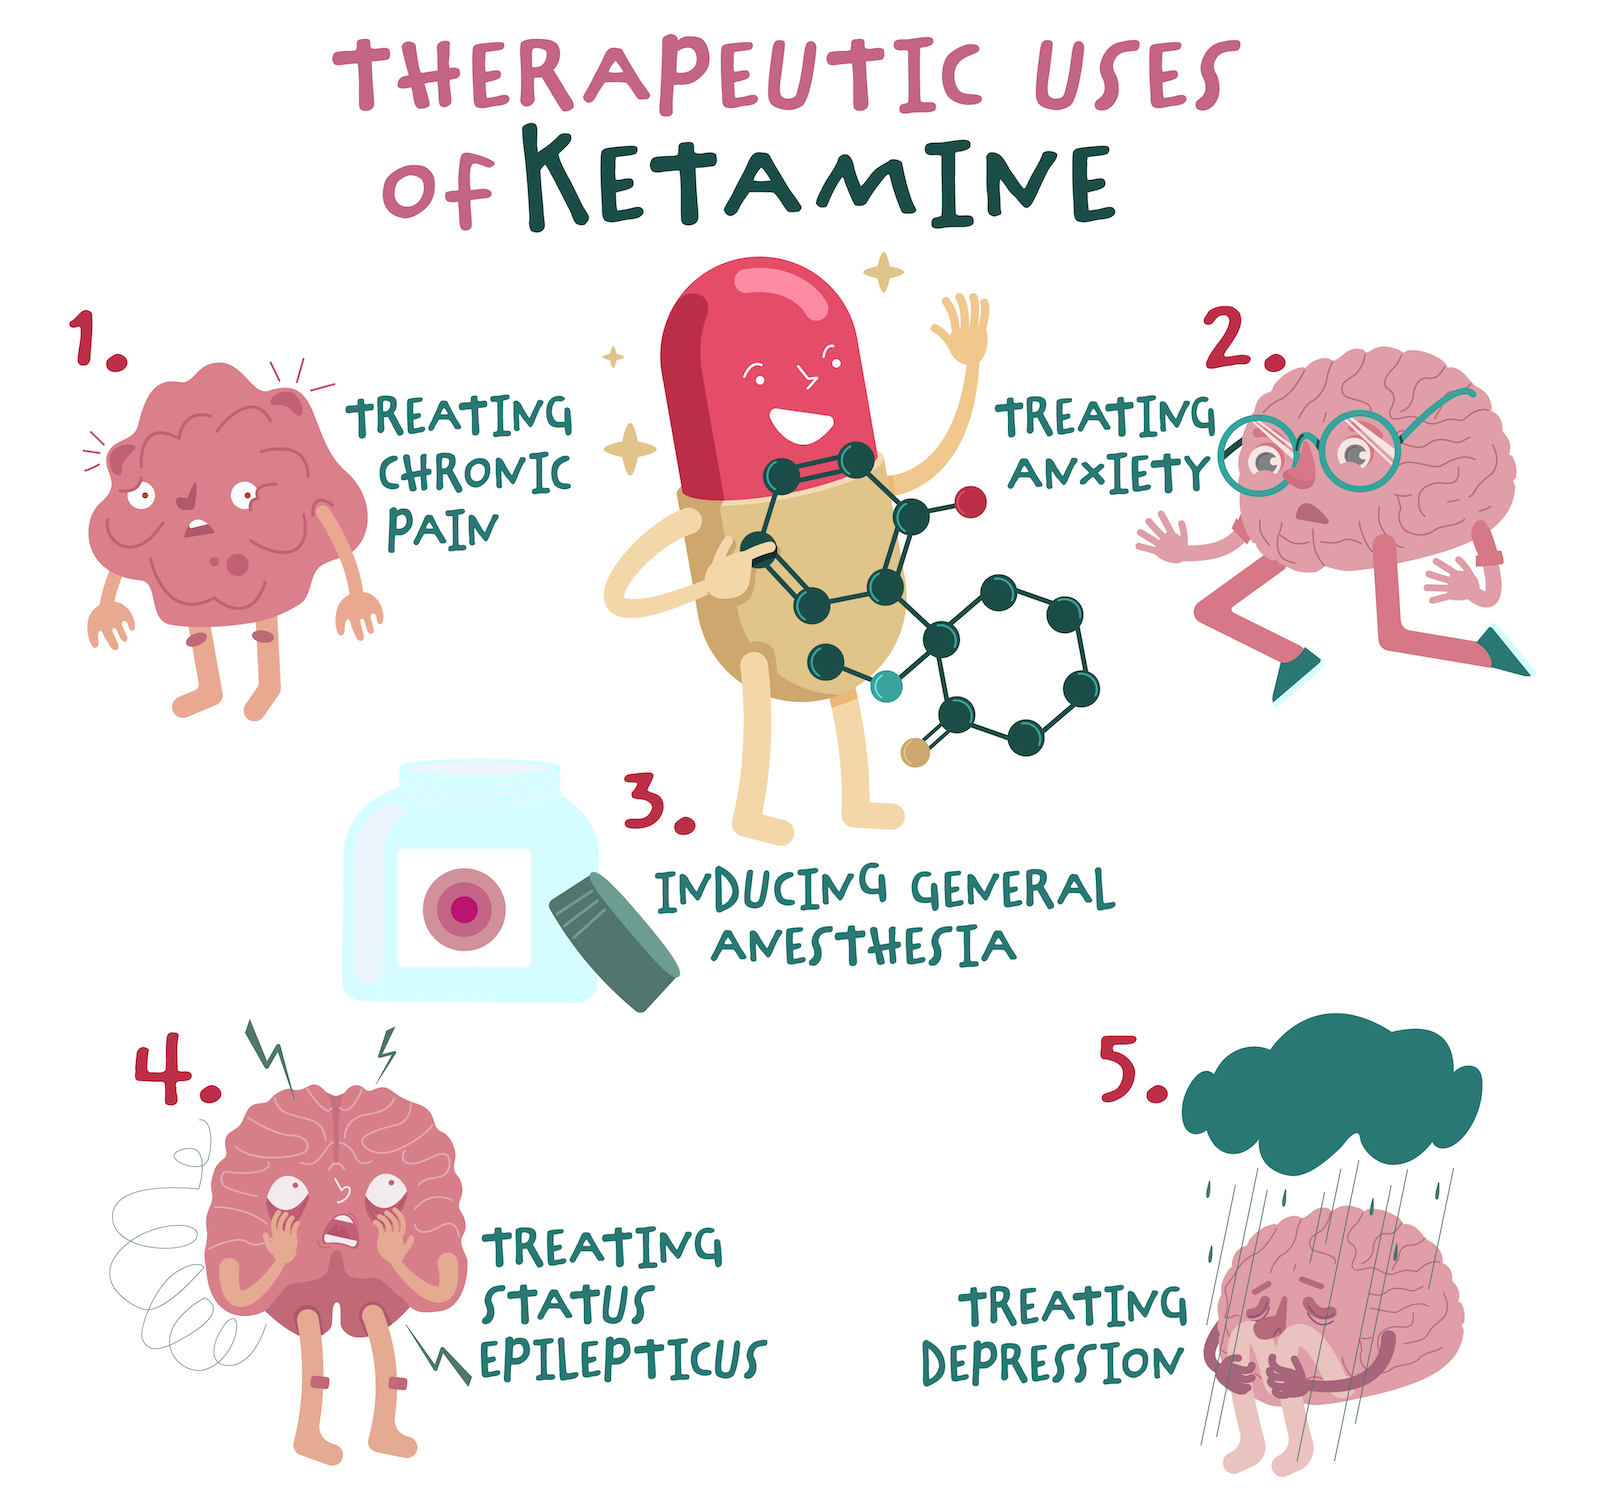 A cartoon illustrating the therapeutic uses of ketamine